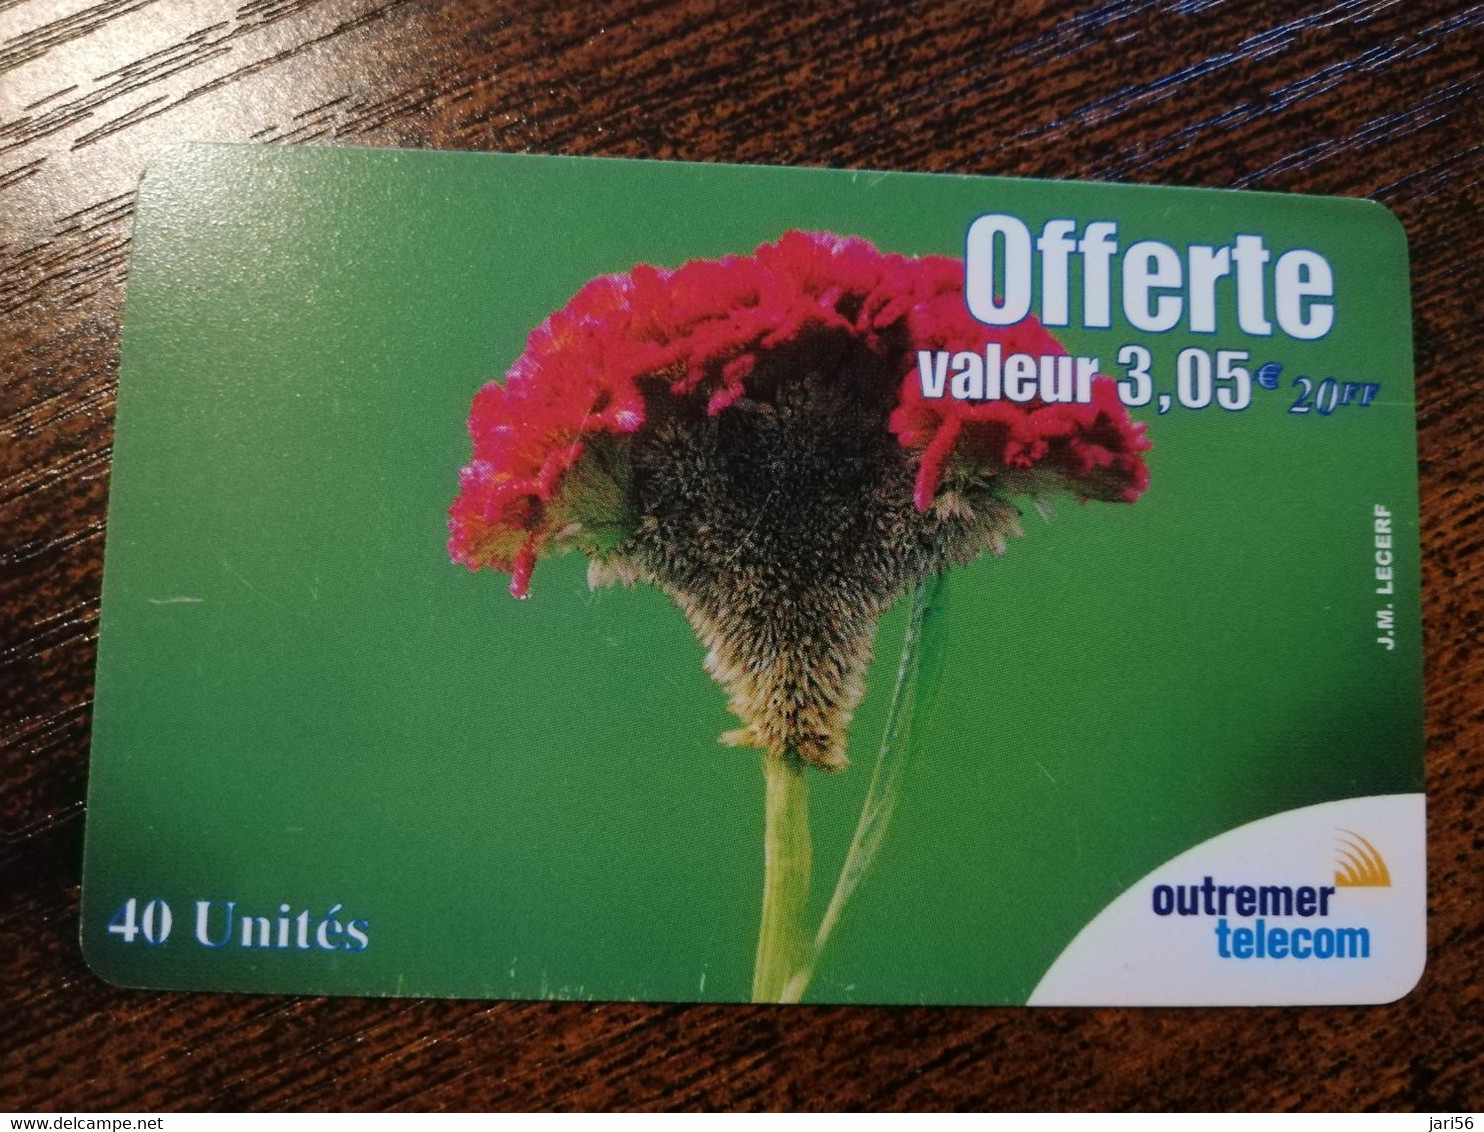 ST MARTIN  OUTREMER TELECOM/ 20FF OFFERTE  FLOWER     ** 6757 ** - Antilles (French)